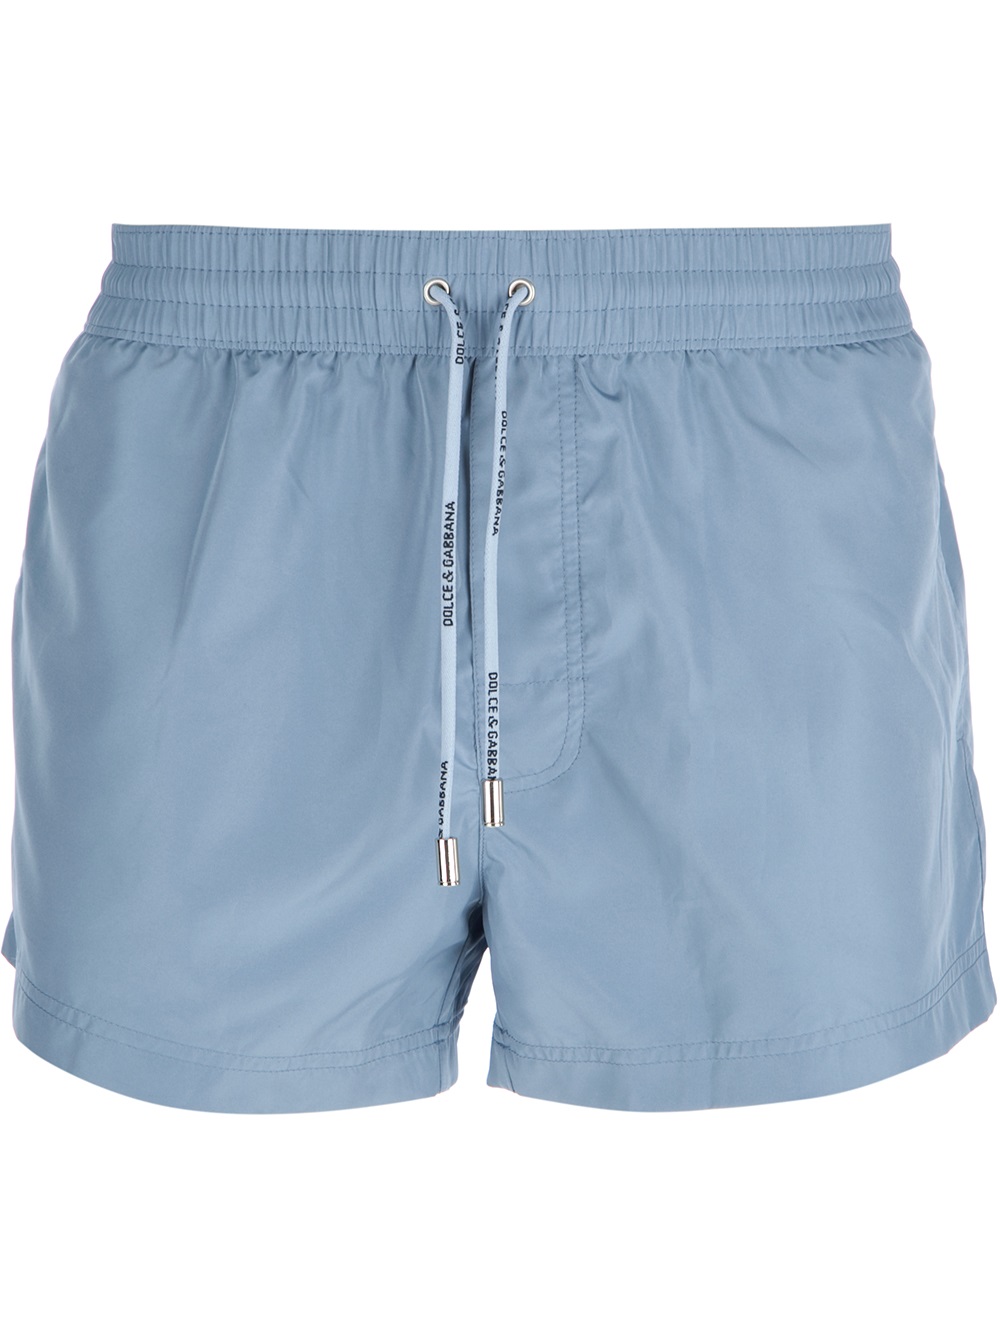 Dolce & Gabbana Deck Shorts in Blue for Men - Lyst